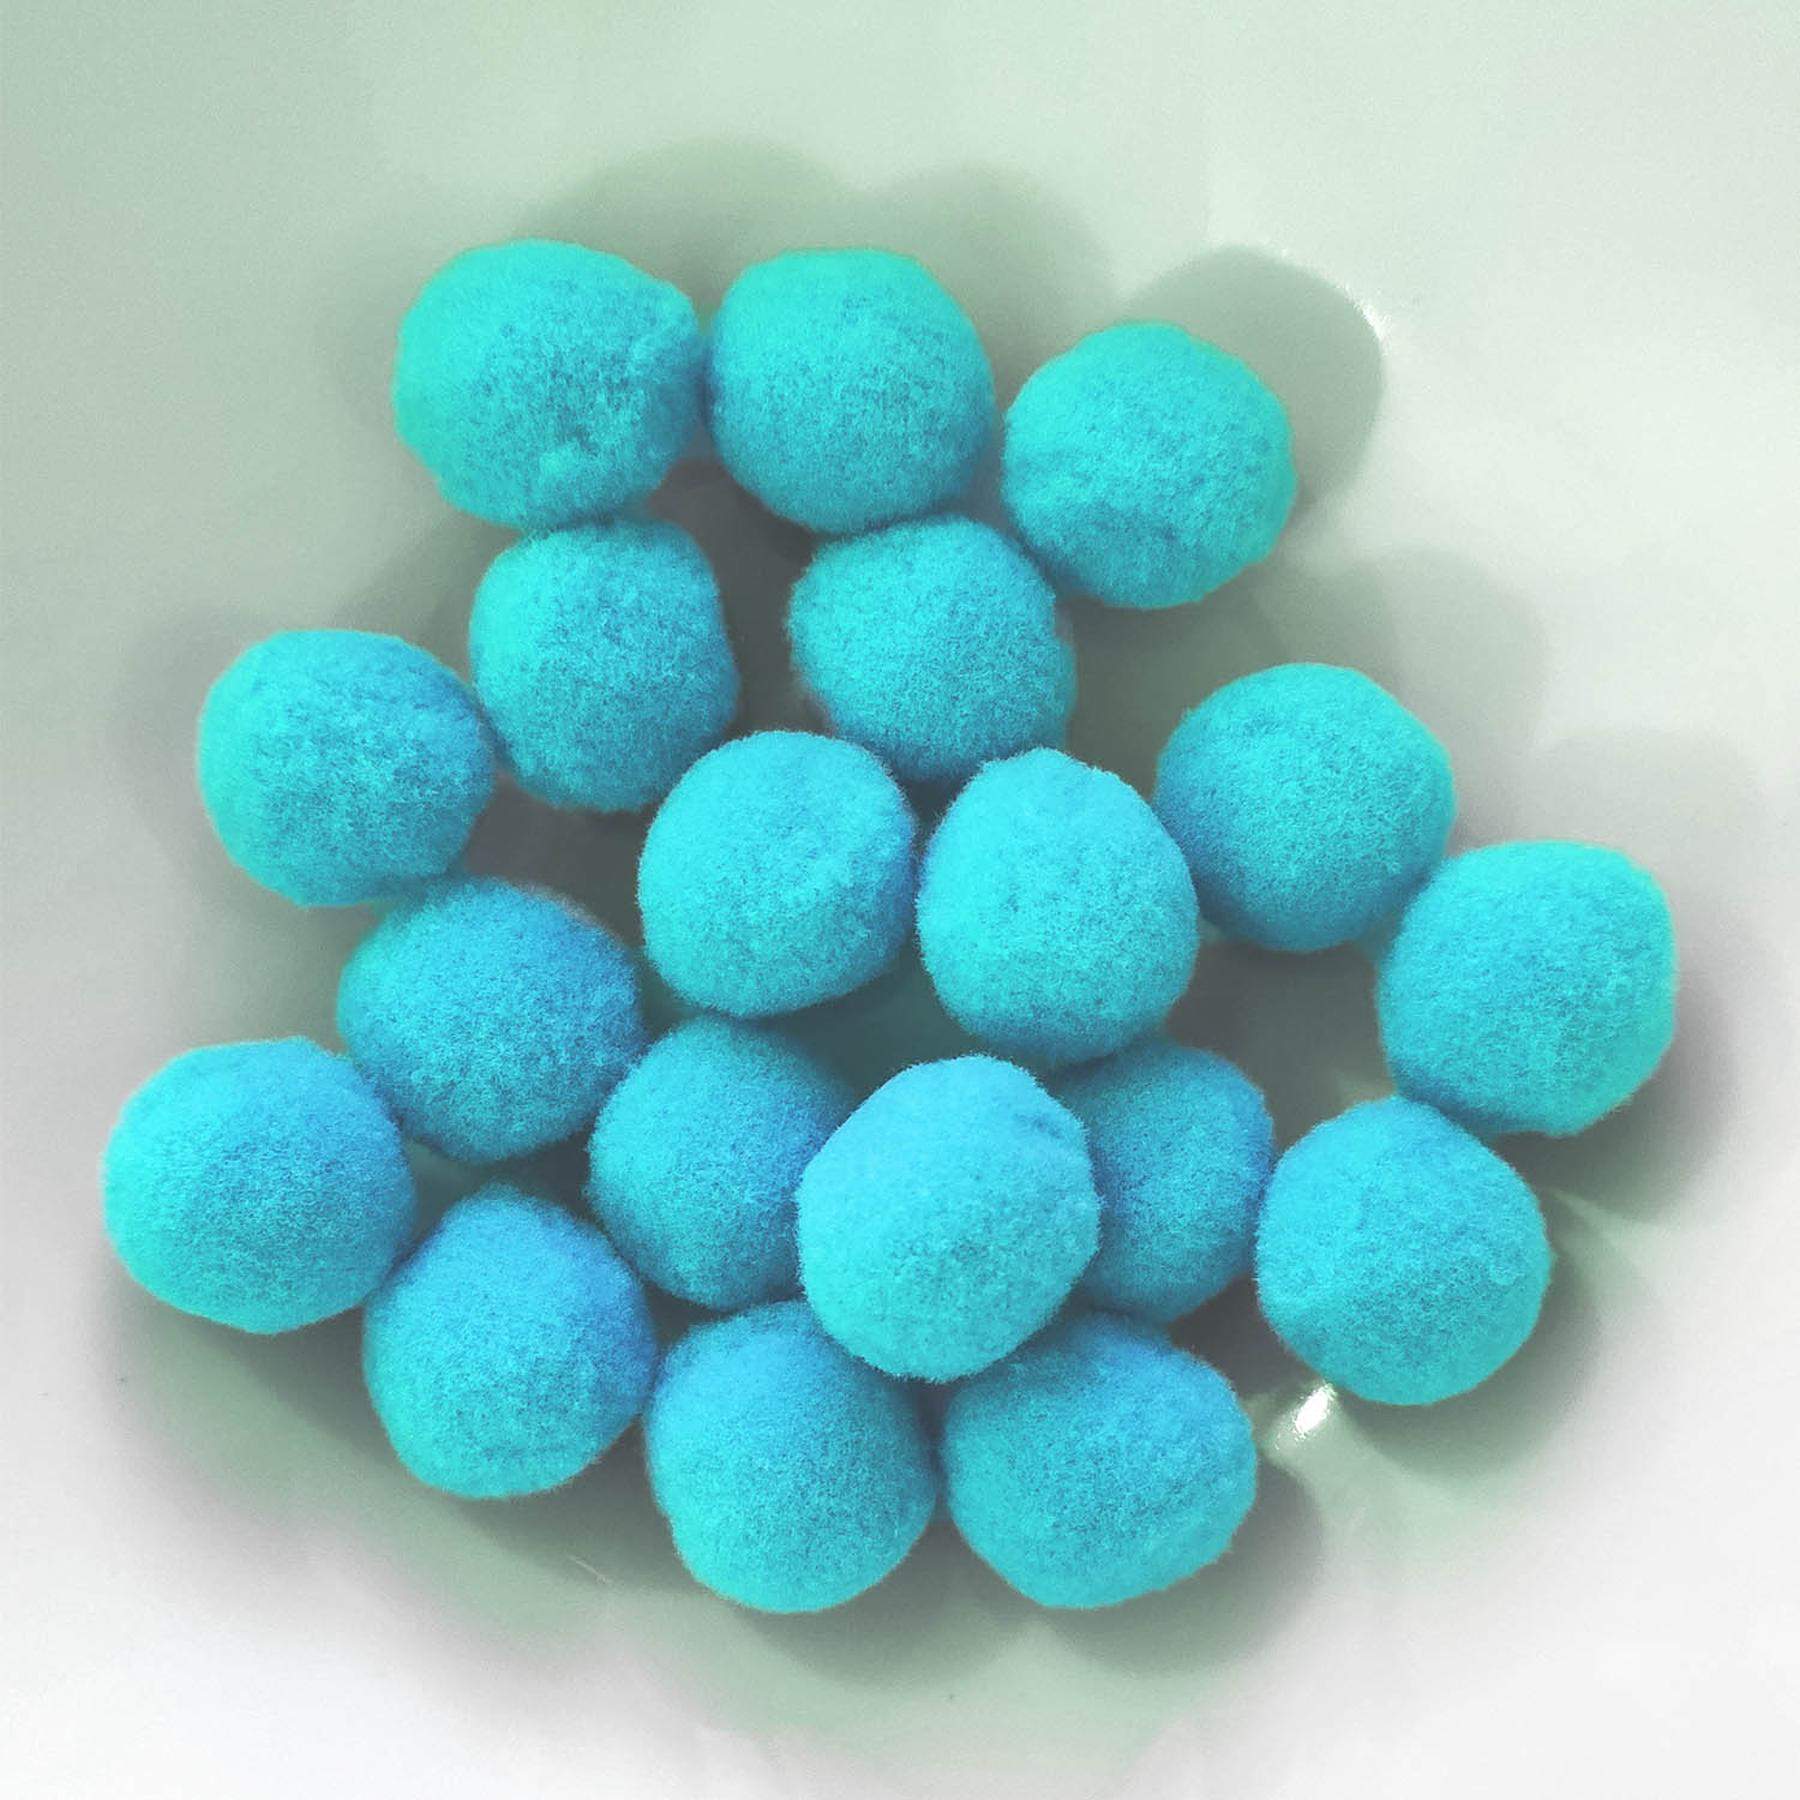 PomPon / Bälle aus Baumwolle - 10 mm / 50er Set - Blau hell / Himmelblau